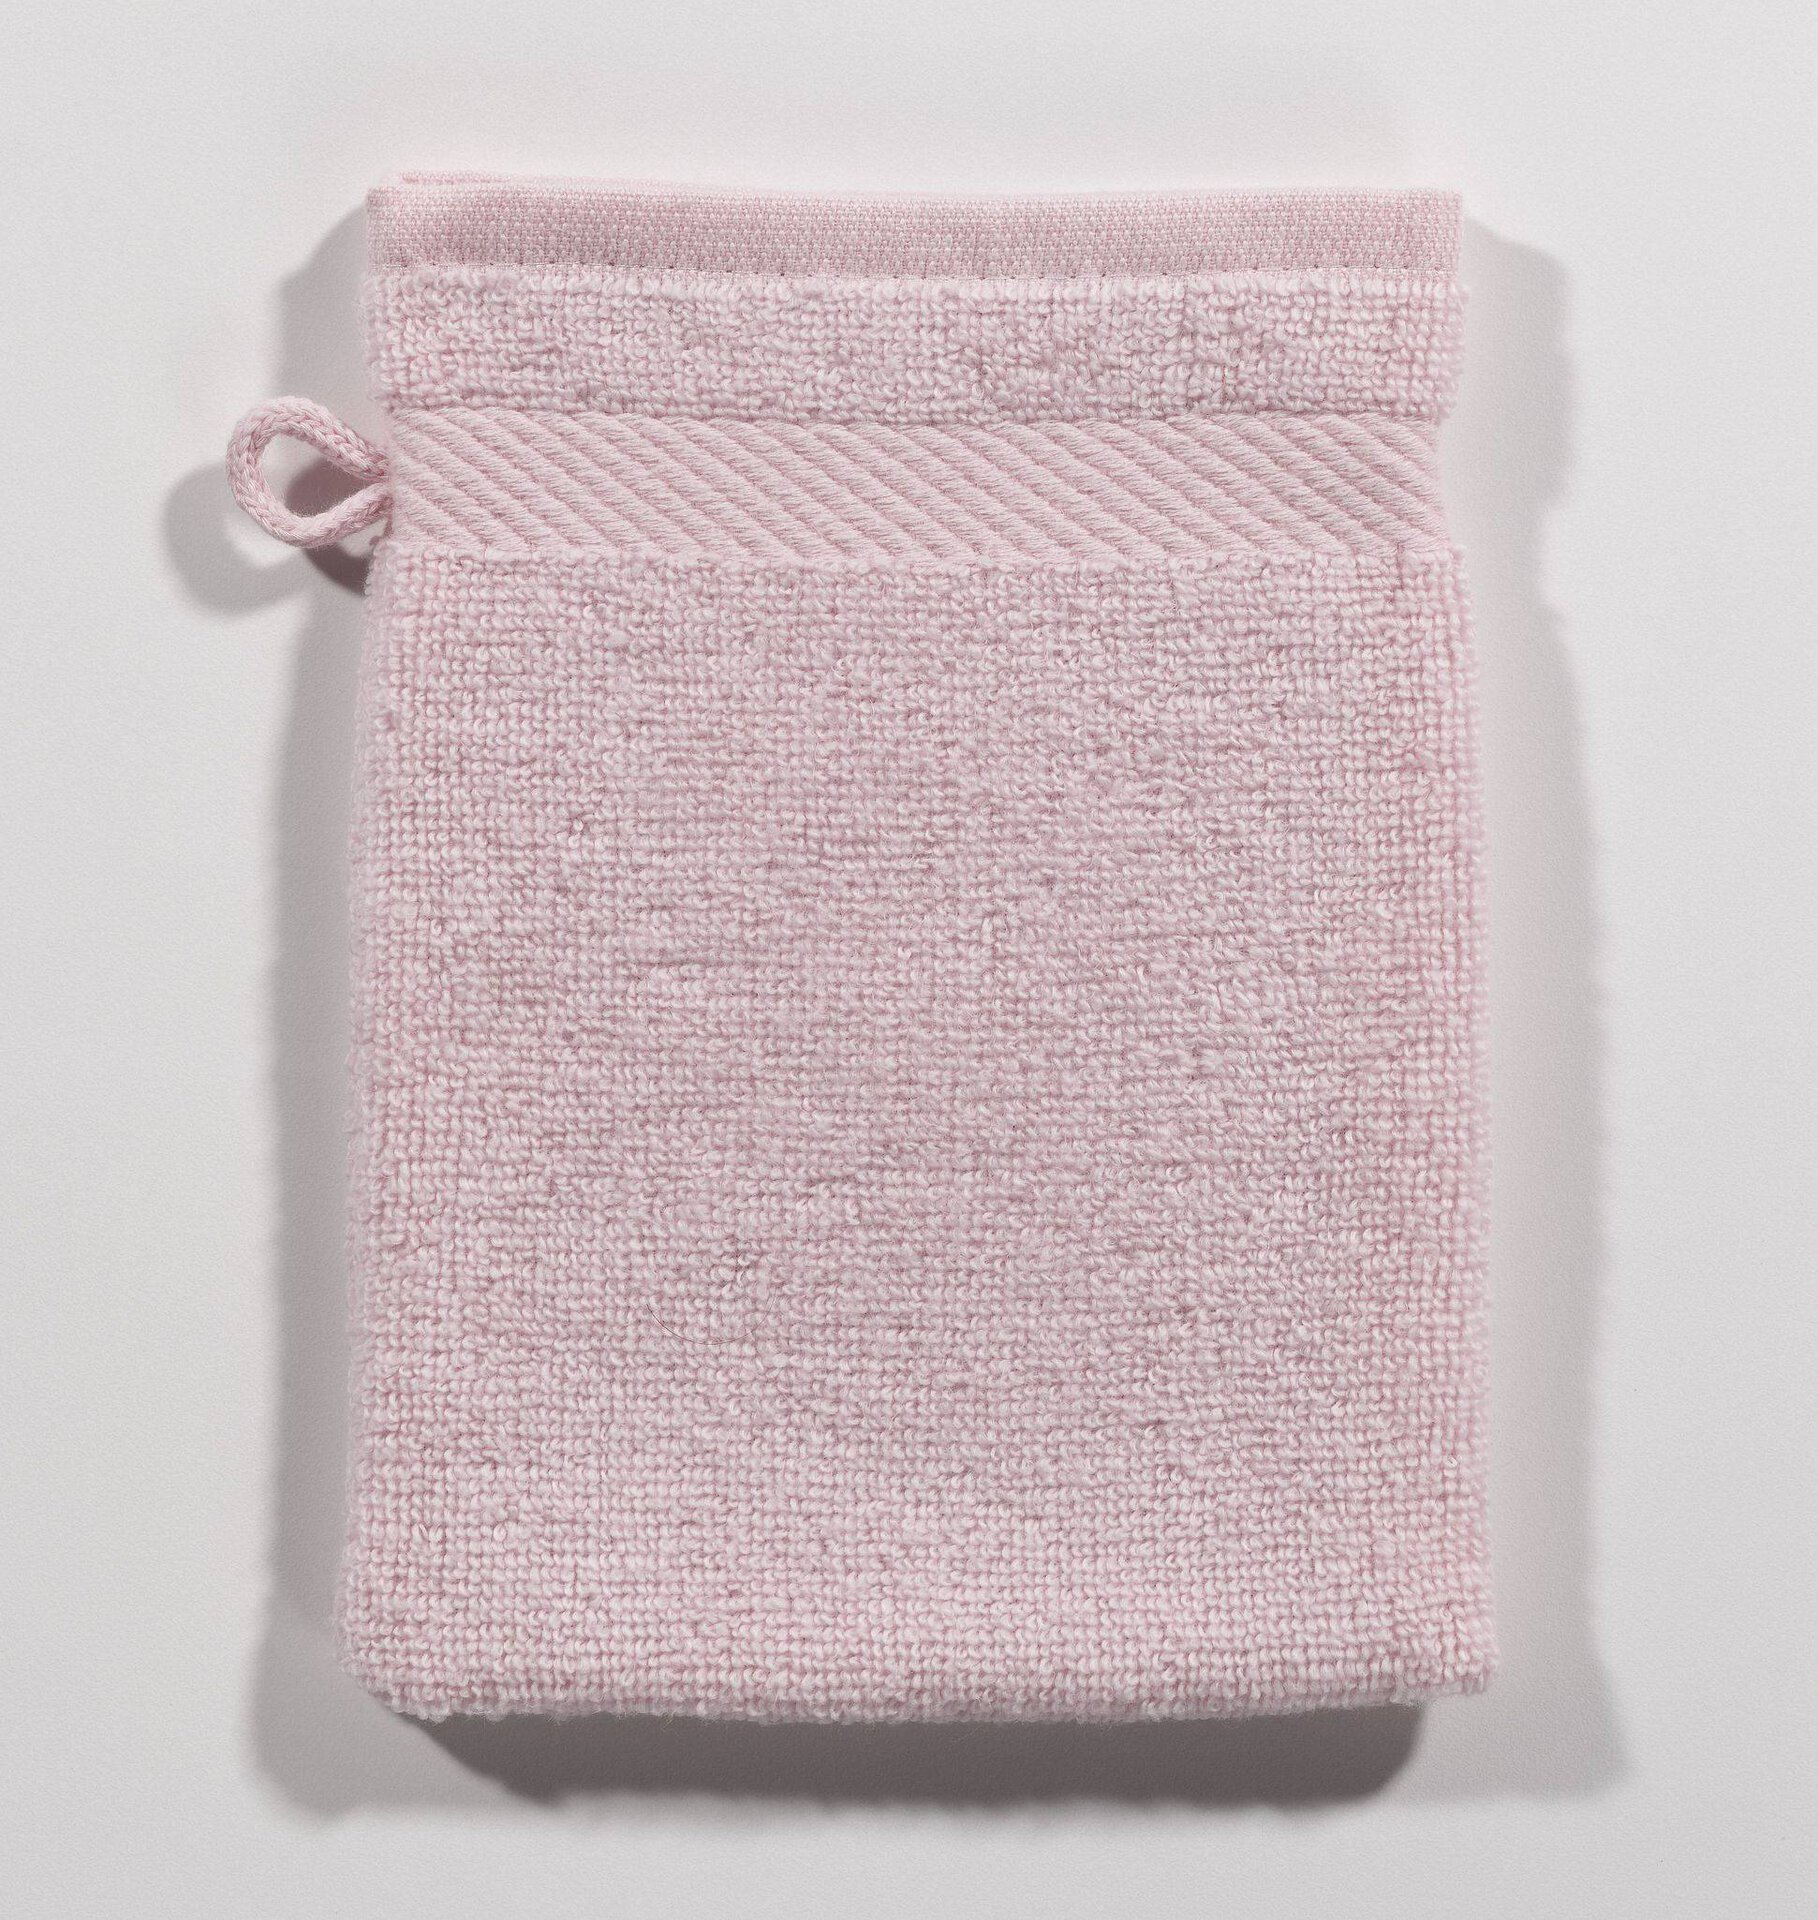 Waschhandschuh Micro Baumwolle Casa Nova Textil 16 x 21 cm